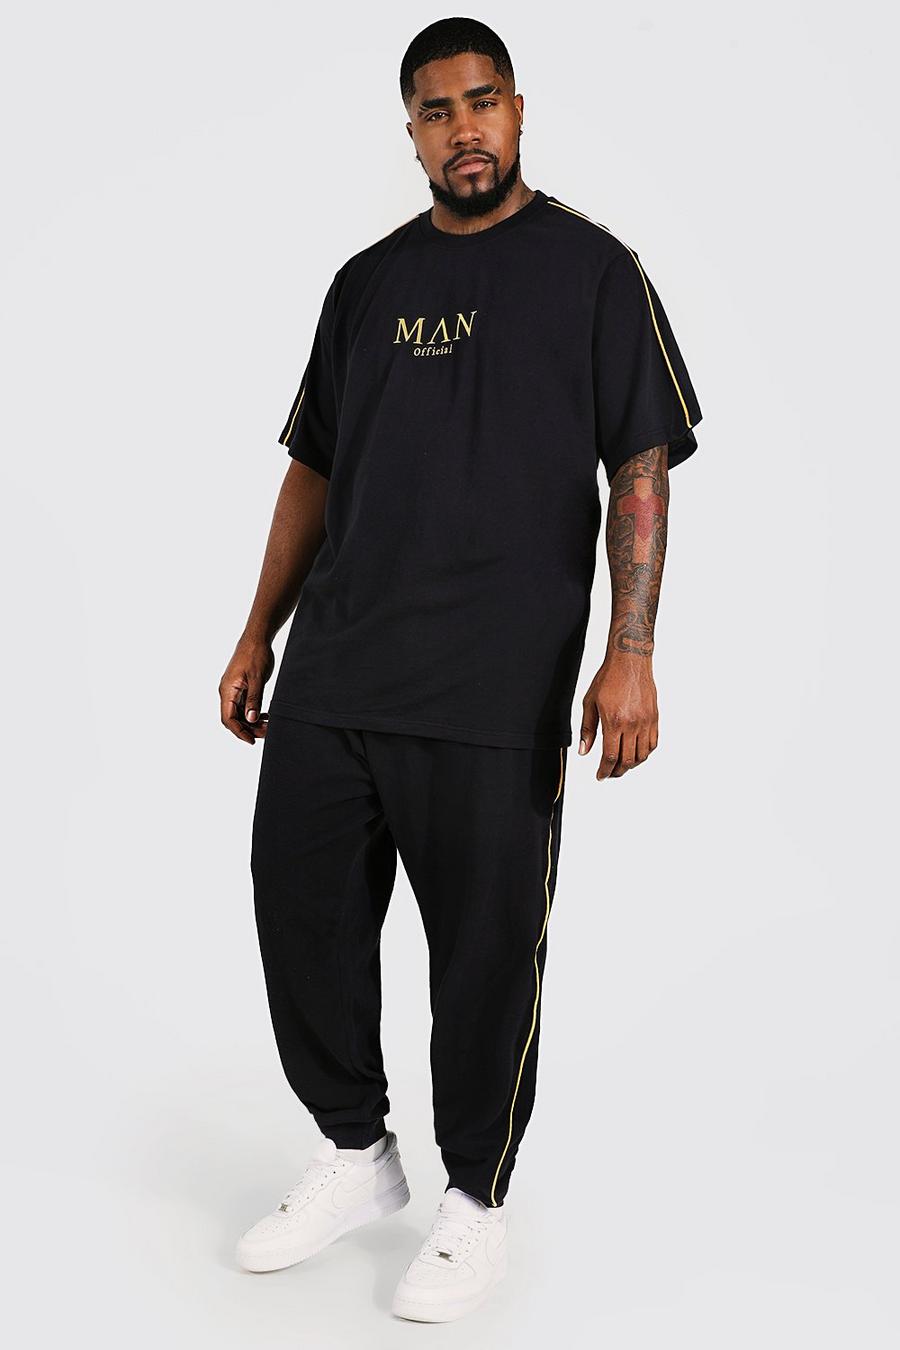 Plus Man Gold T-Shirt und Jogginghose, Black schwarz image number 1